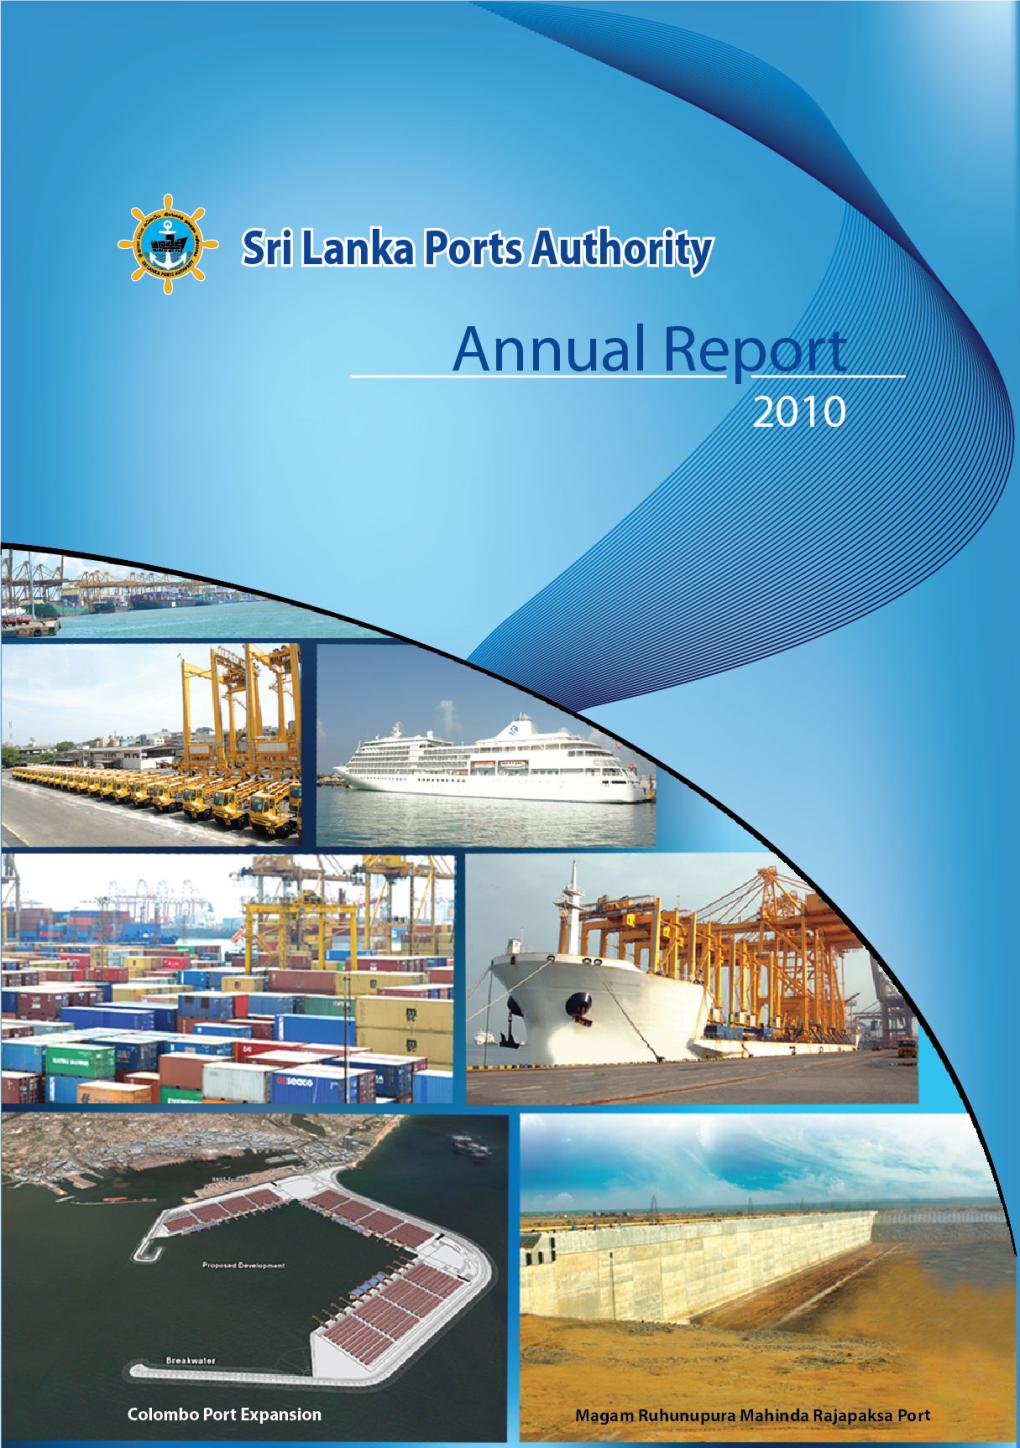 Sri Lanka Ports Authority for the Year 2010